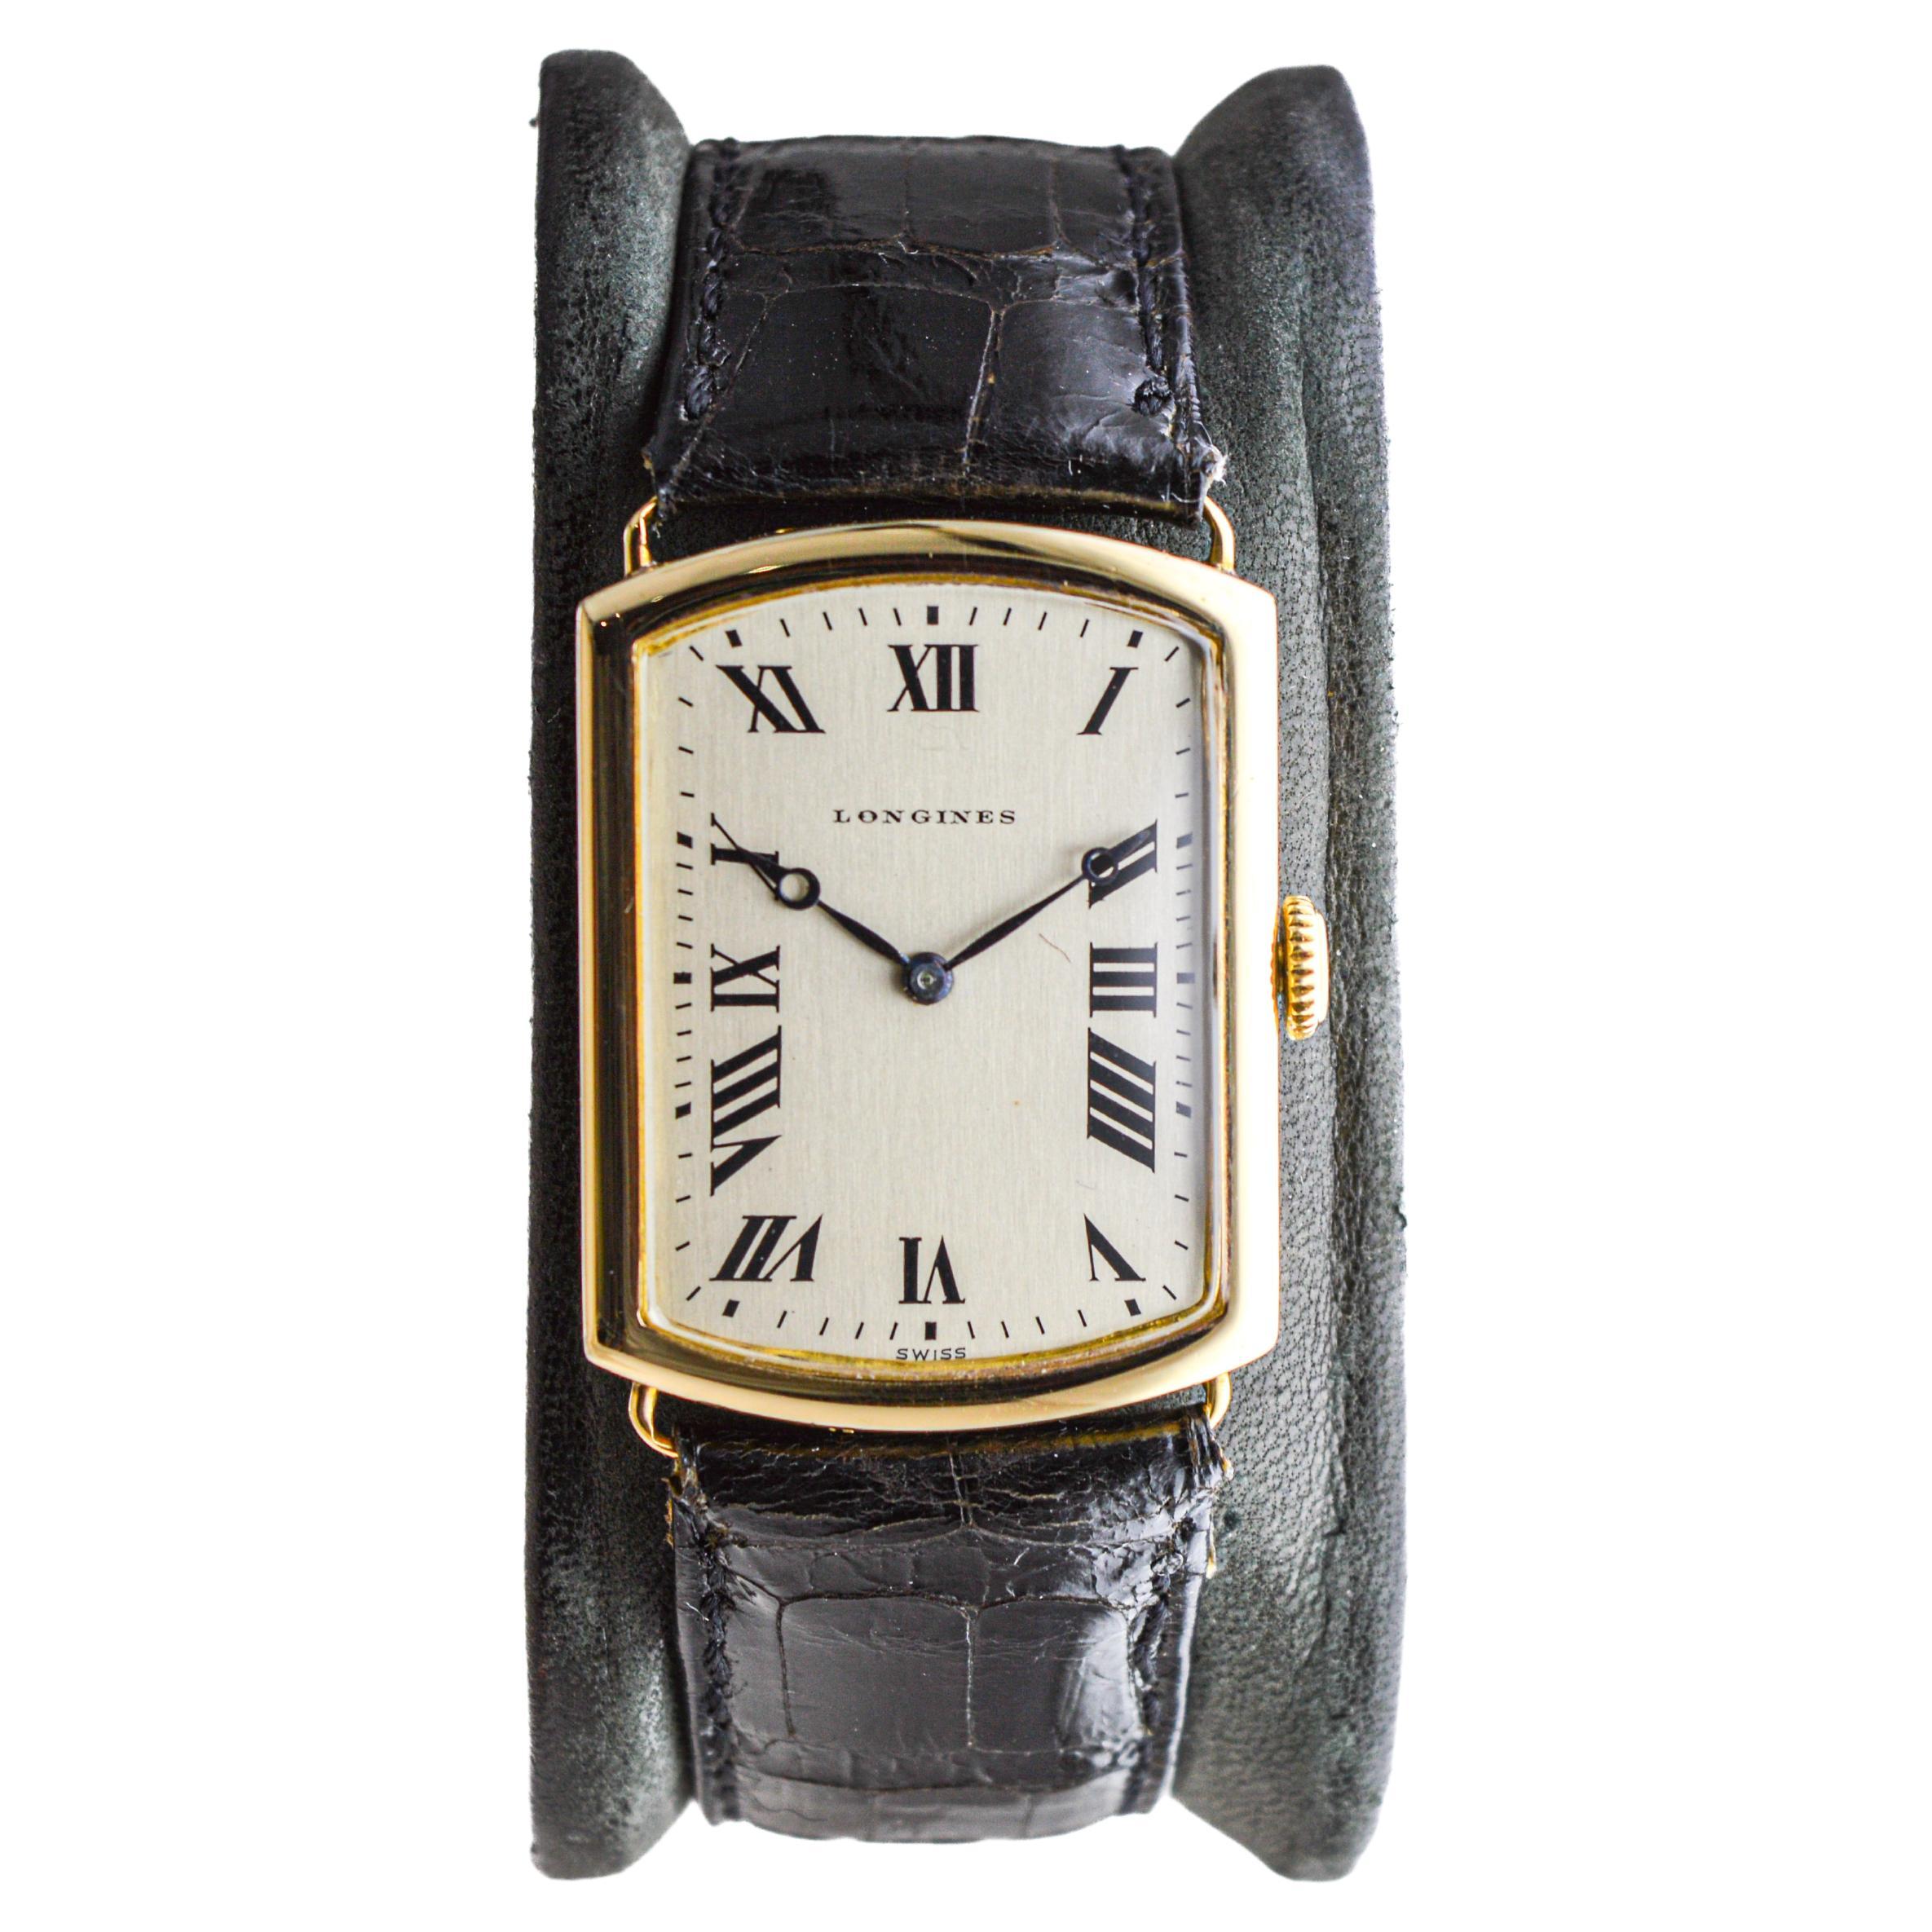 Longines 18Kt. Yellow Gold Men's Wrist Watch, French Hallmarked 1930's